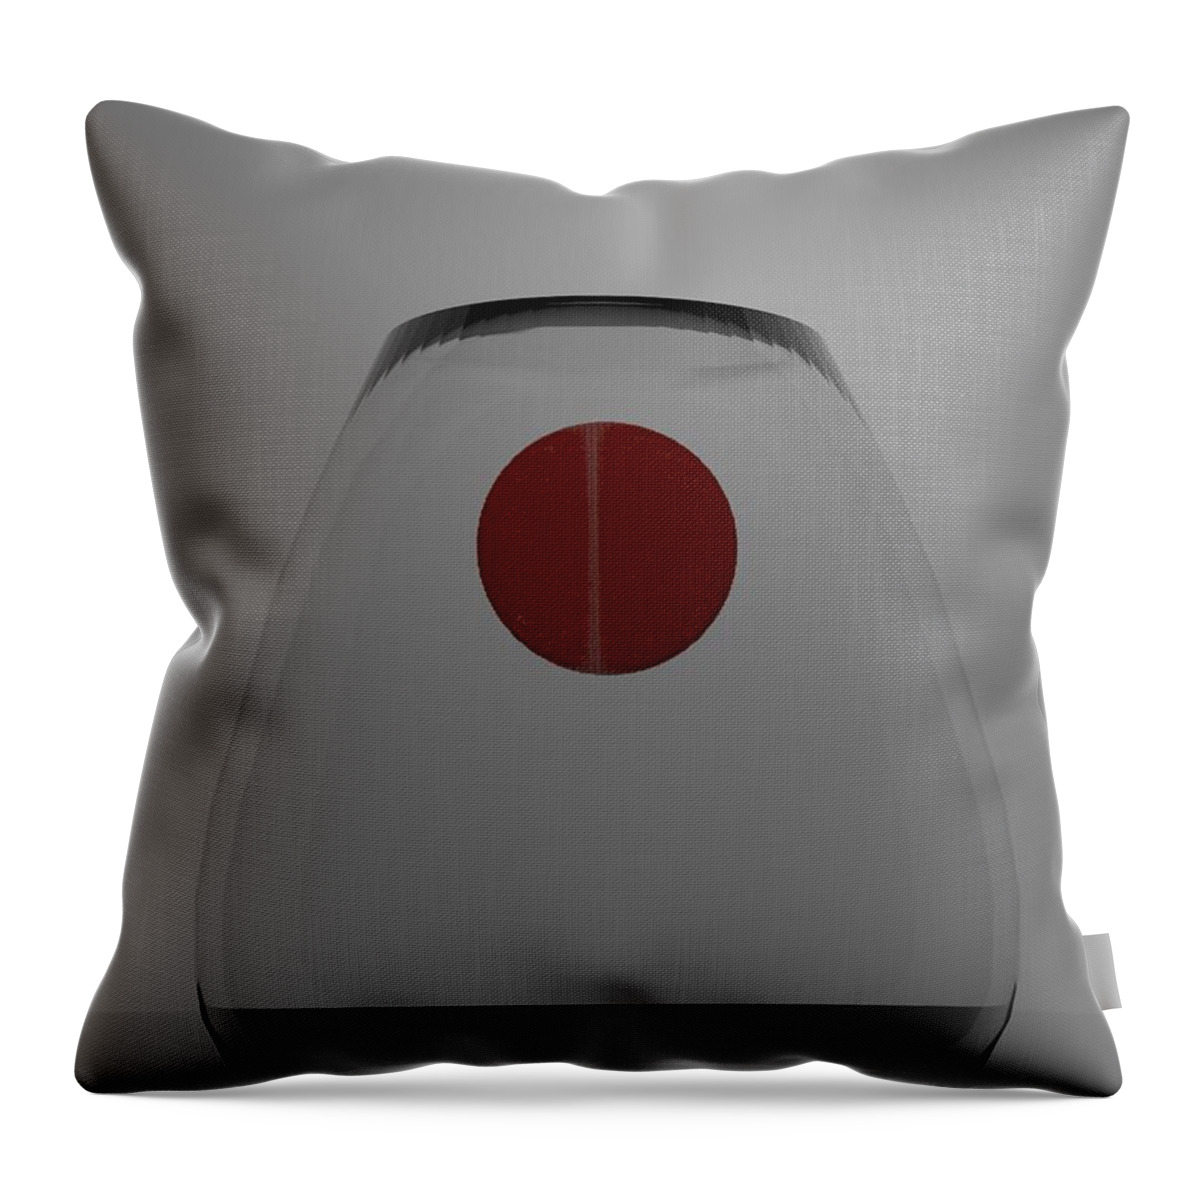 Nft Throw Pillow featuring the digital art 701 Citronella by David Bridburg